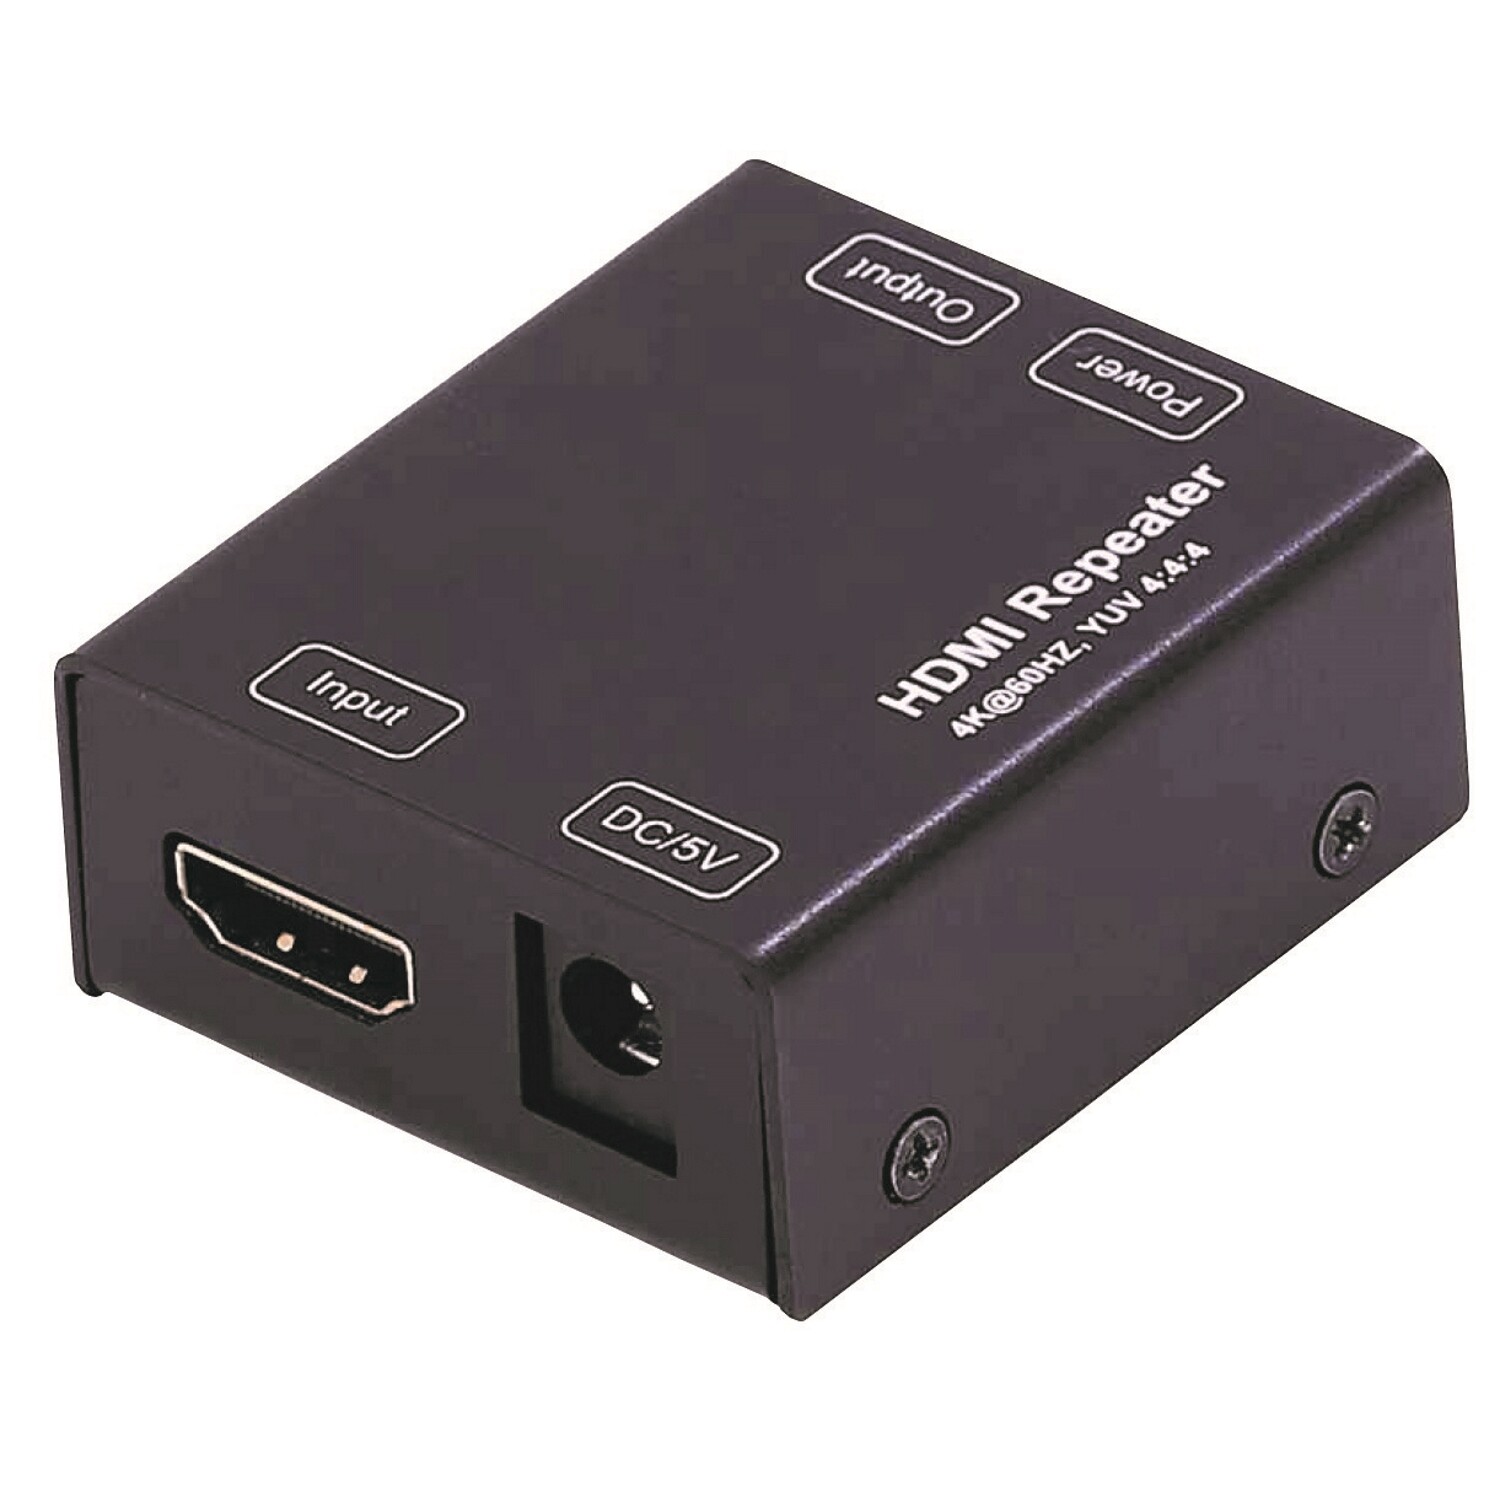 Kindermann-HDMI-Repeater-4K60-HDMI-2-0-Extender